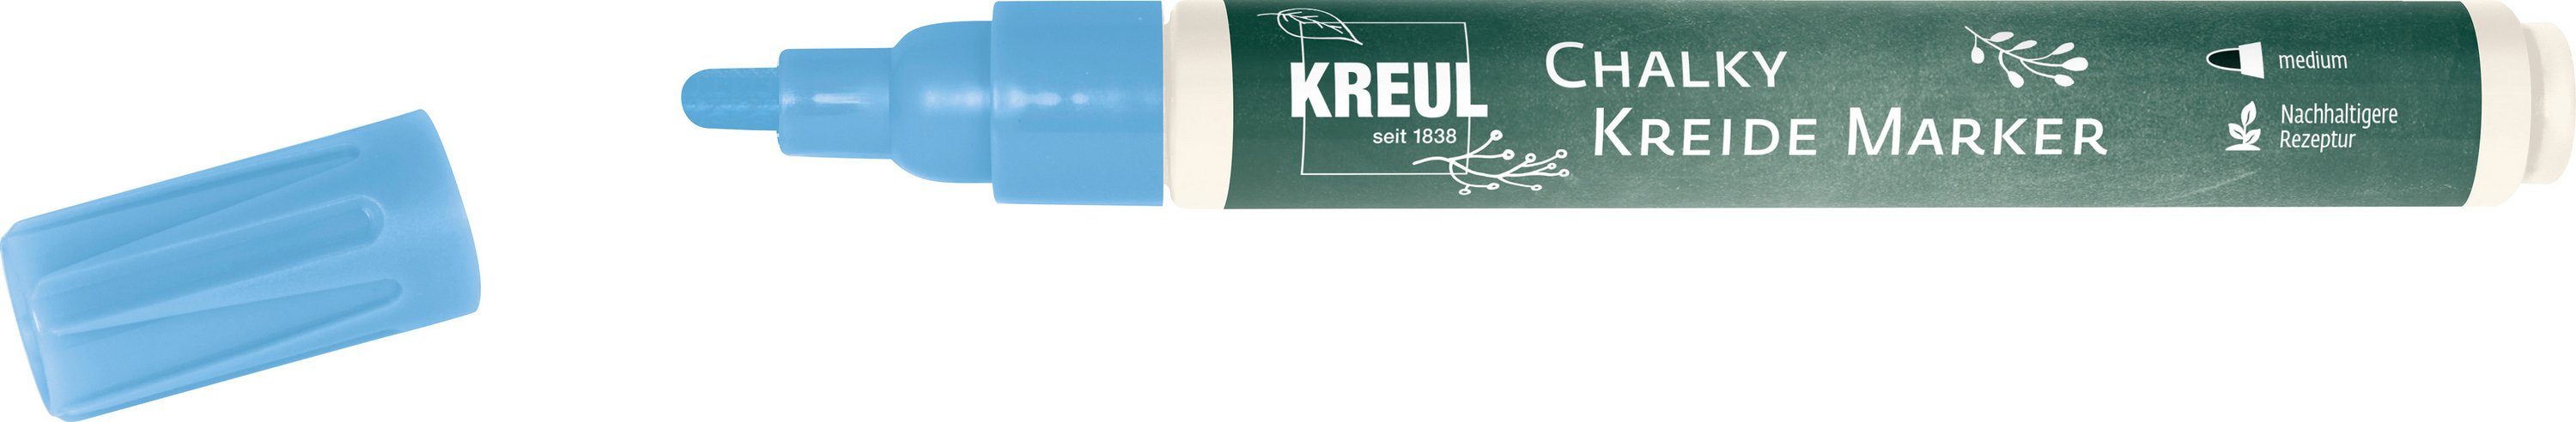 Kreidemarker Kreul Blue Strichstärke 2-3mm Chalky, Nordic